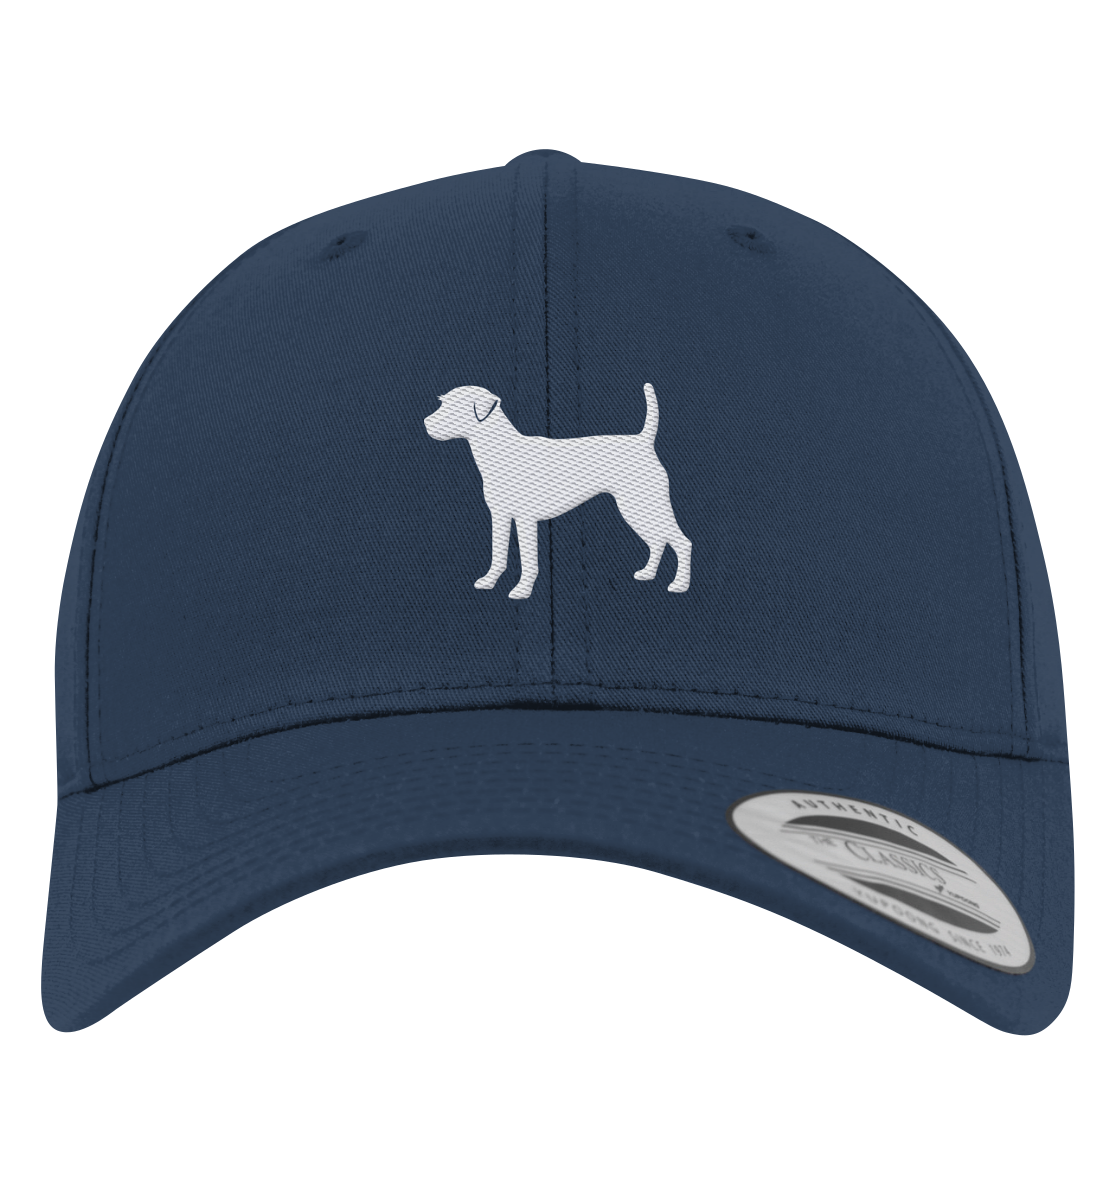 Parson Russell Terrier-Silhouette - Premium Baseball Cap